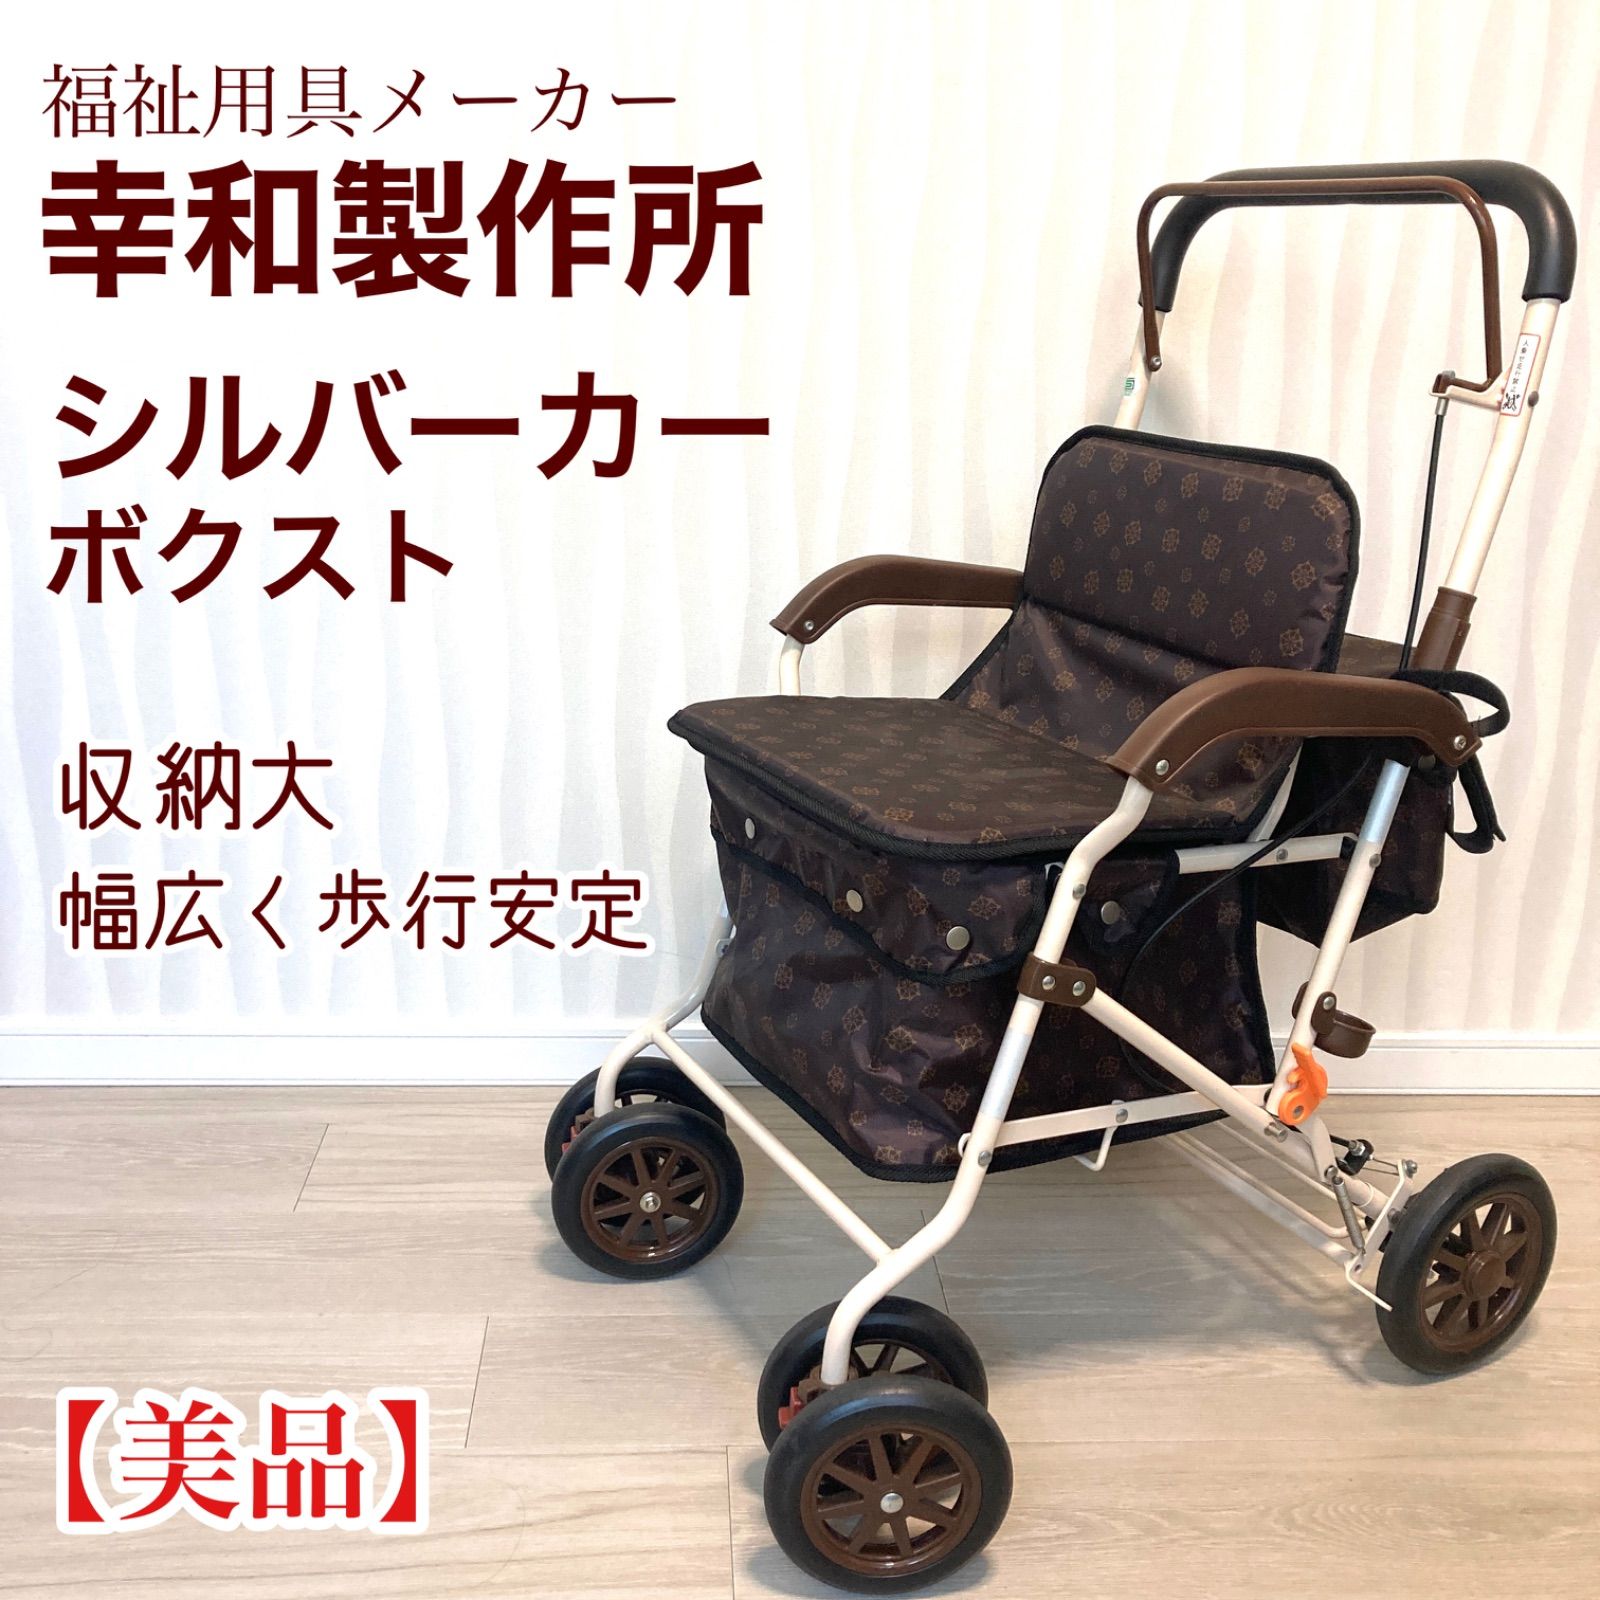 幸和製作所 walking stecky 歩行車 シルバーカー 未使用 - 看護/介護用品